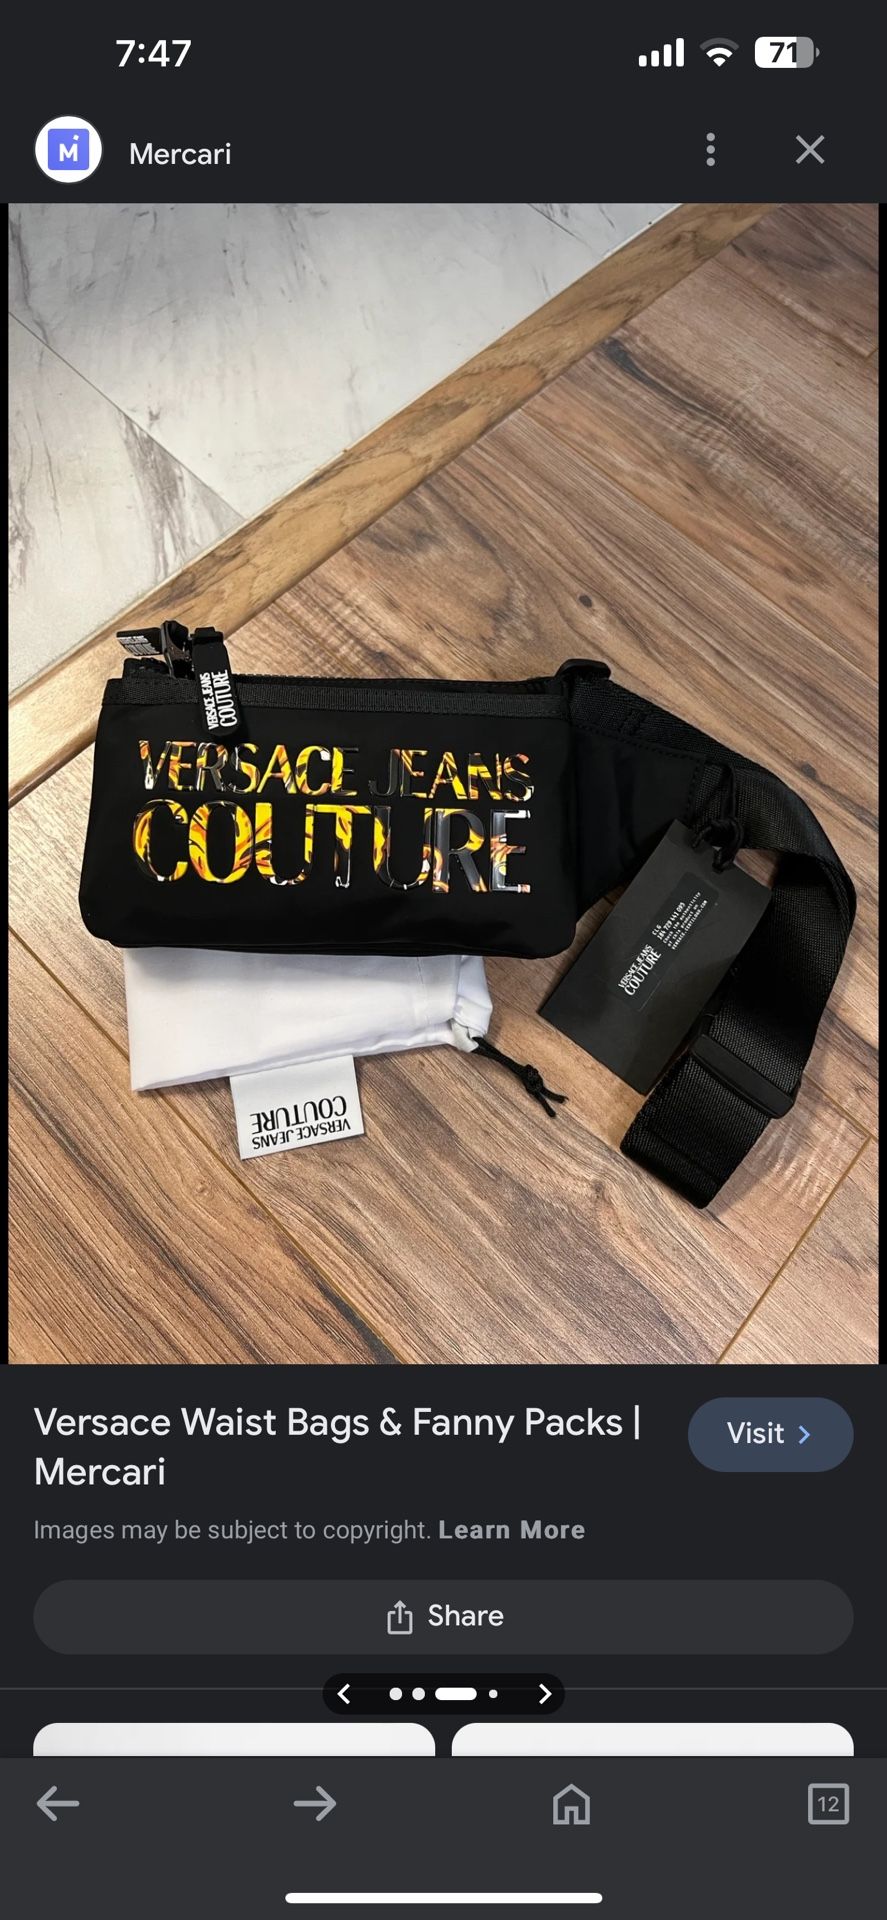 Versace Jeans Couture Belt Bag